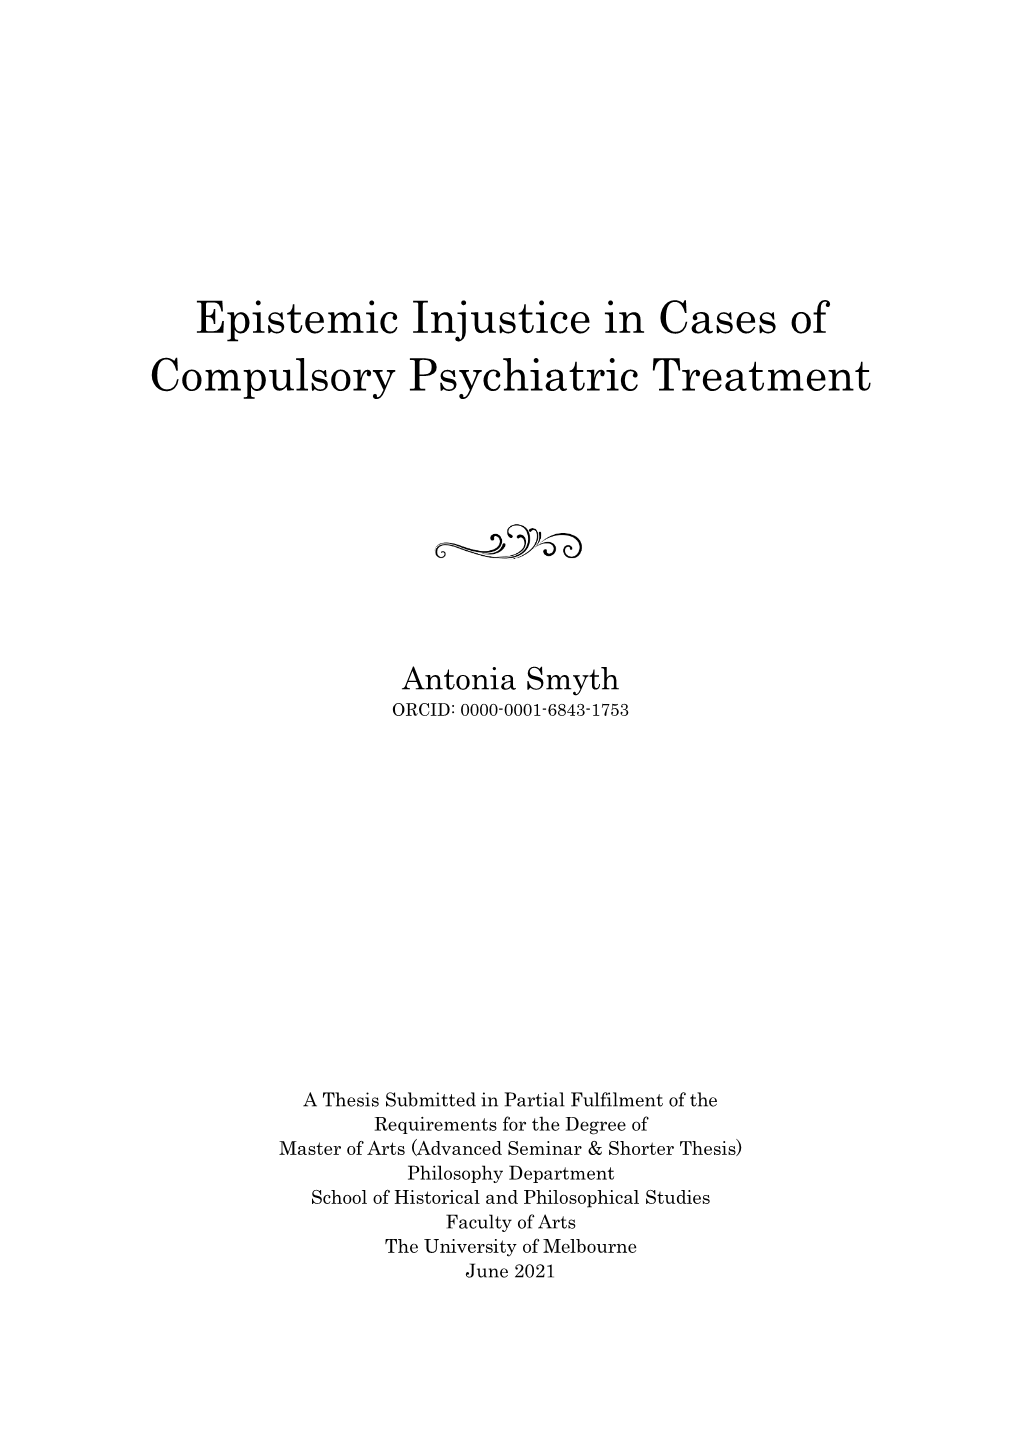 Epistemic Injustice in Cases of Compulsory Psychiatric Treatment